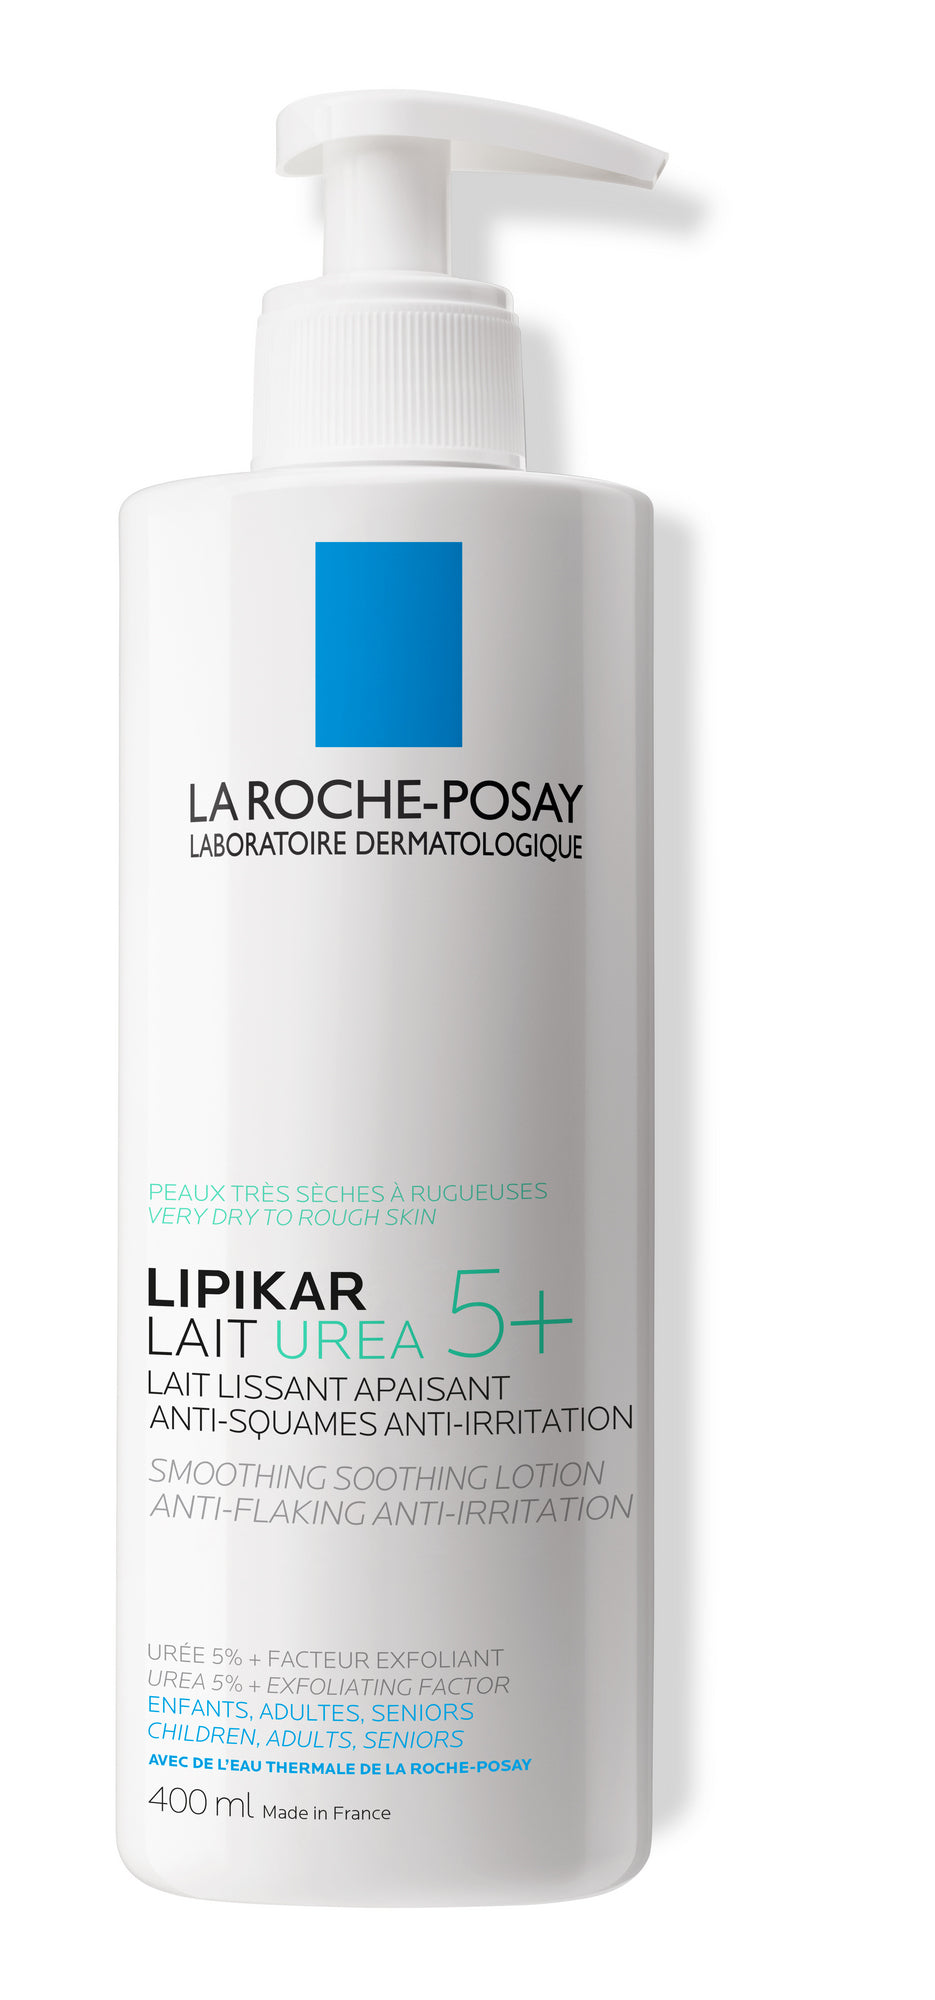 La Roche Posay Lipikar Lait Urea 5+ 400ml